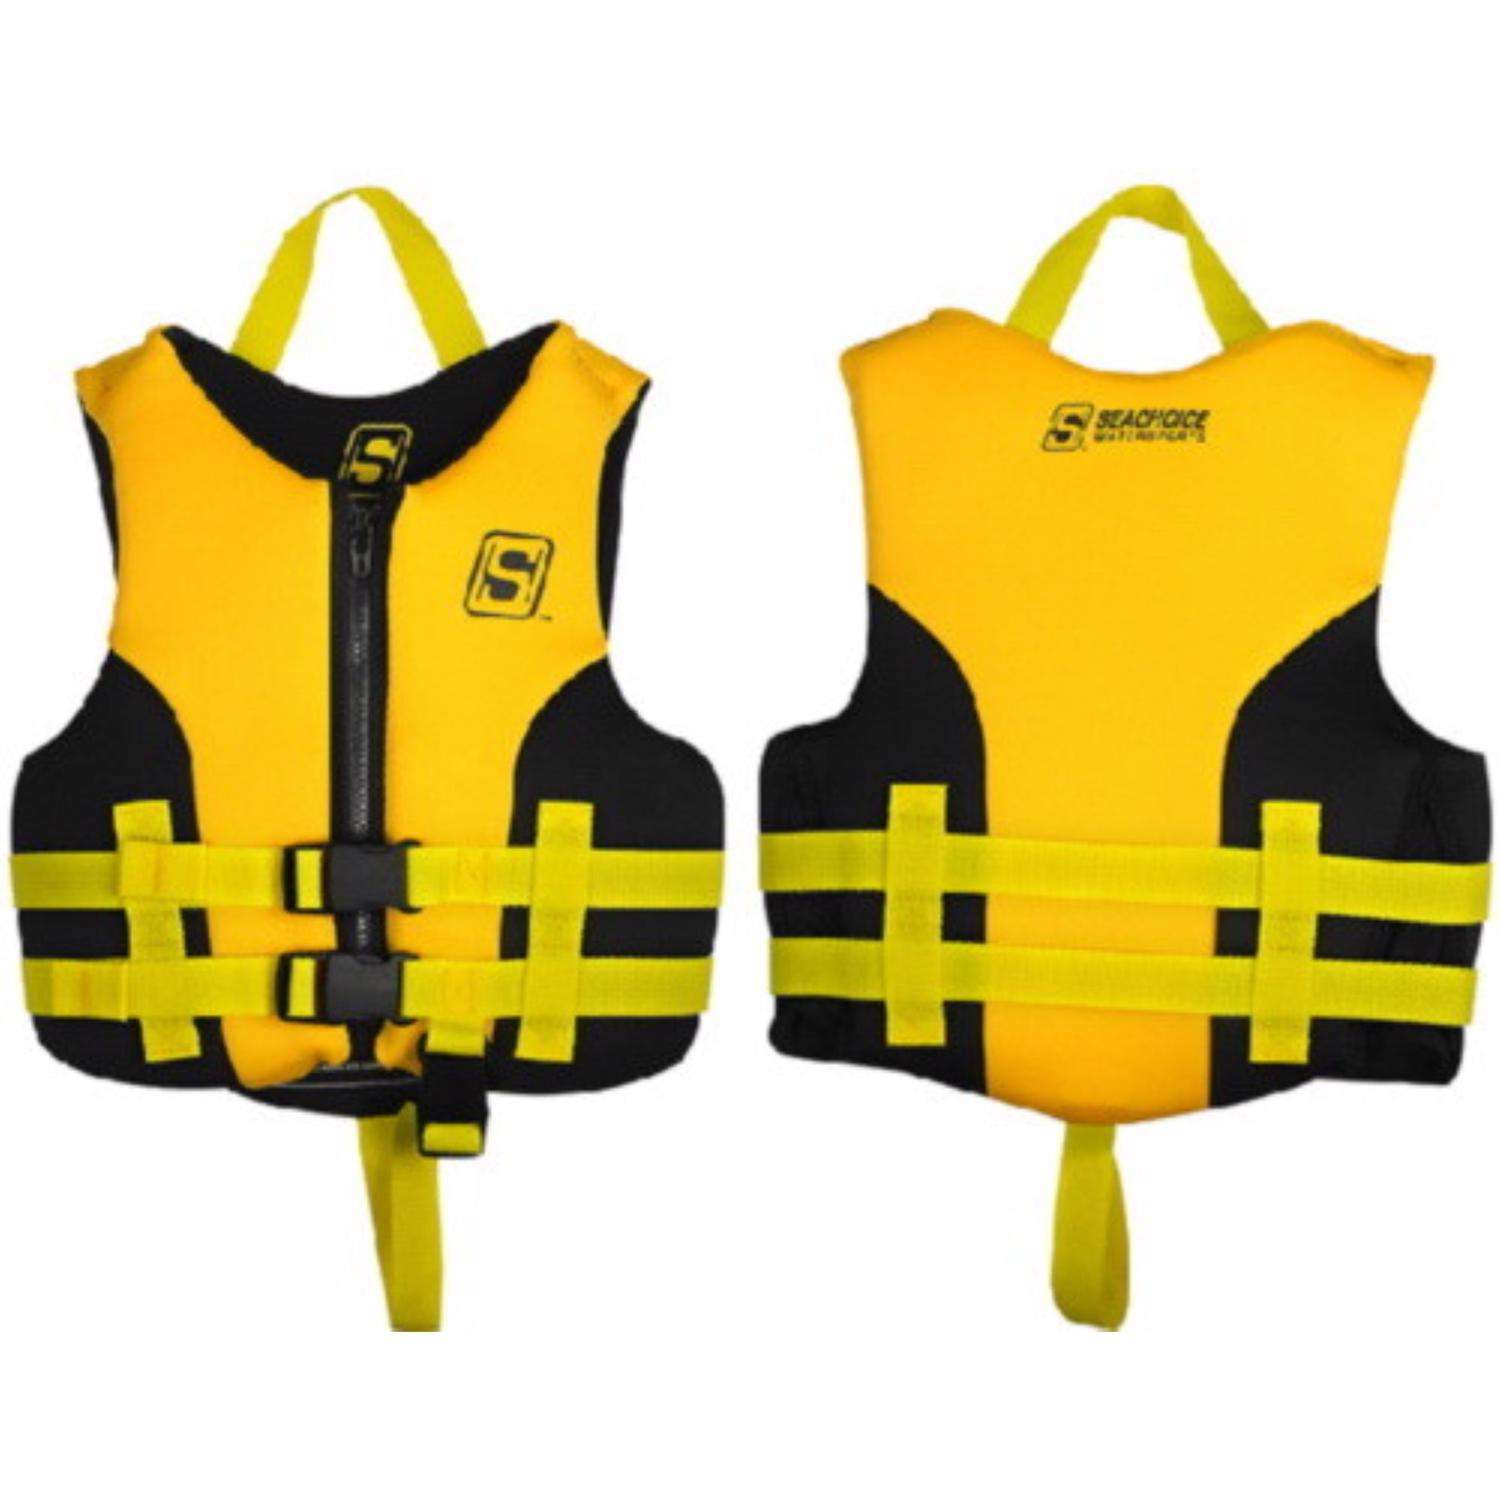 Seachoice Evoprene Child Sizes Black/Yellow Life Vest - Ace Hardware